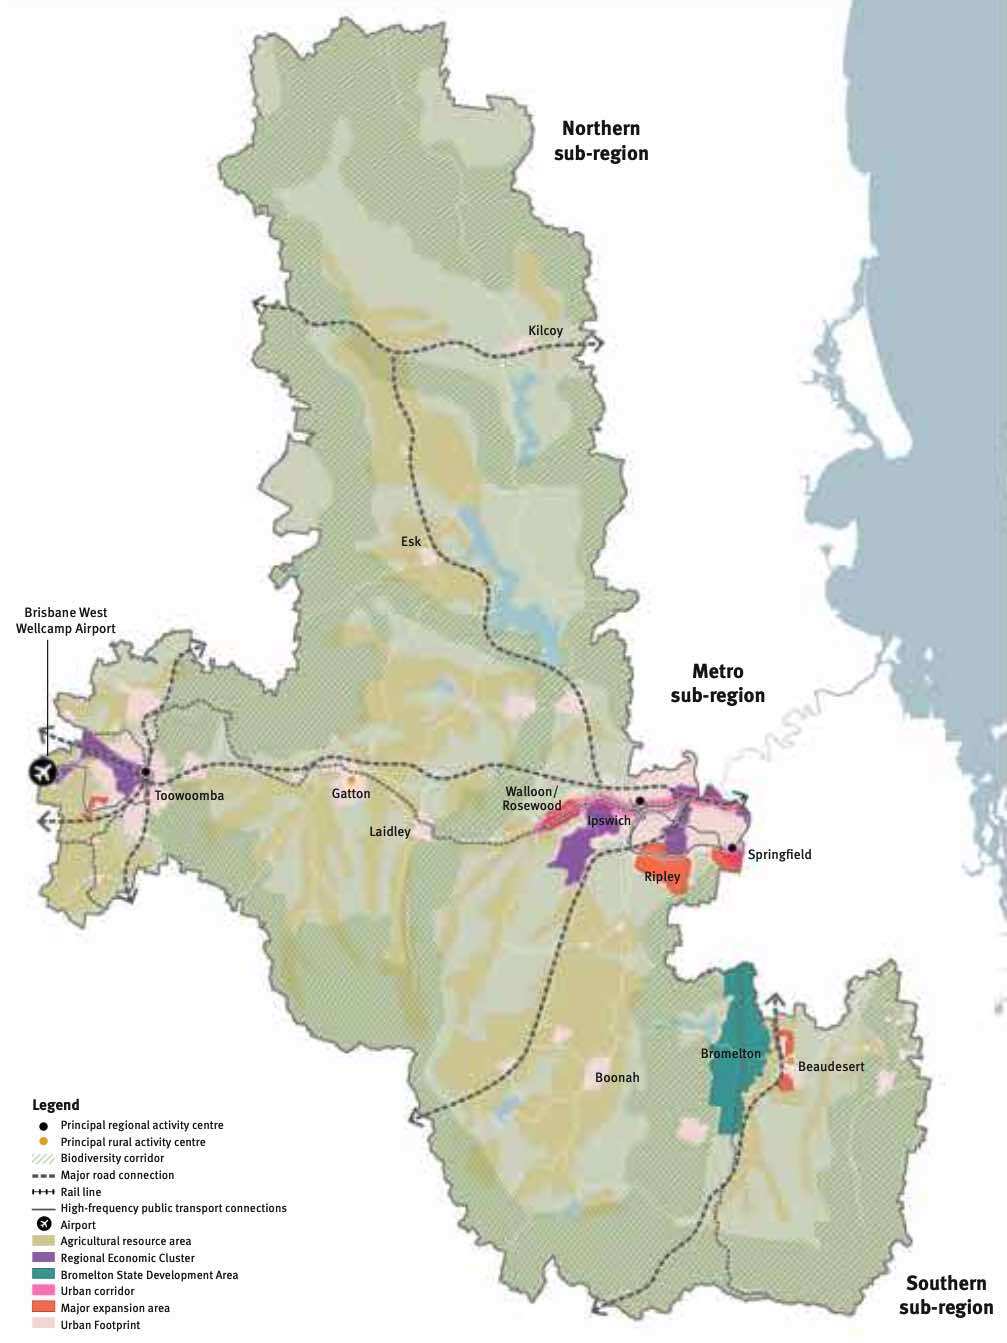 The Western sub-region in South East Queensland’s regional plan¹